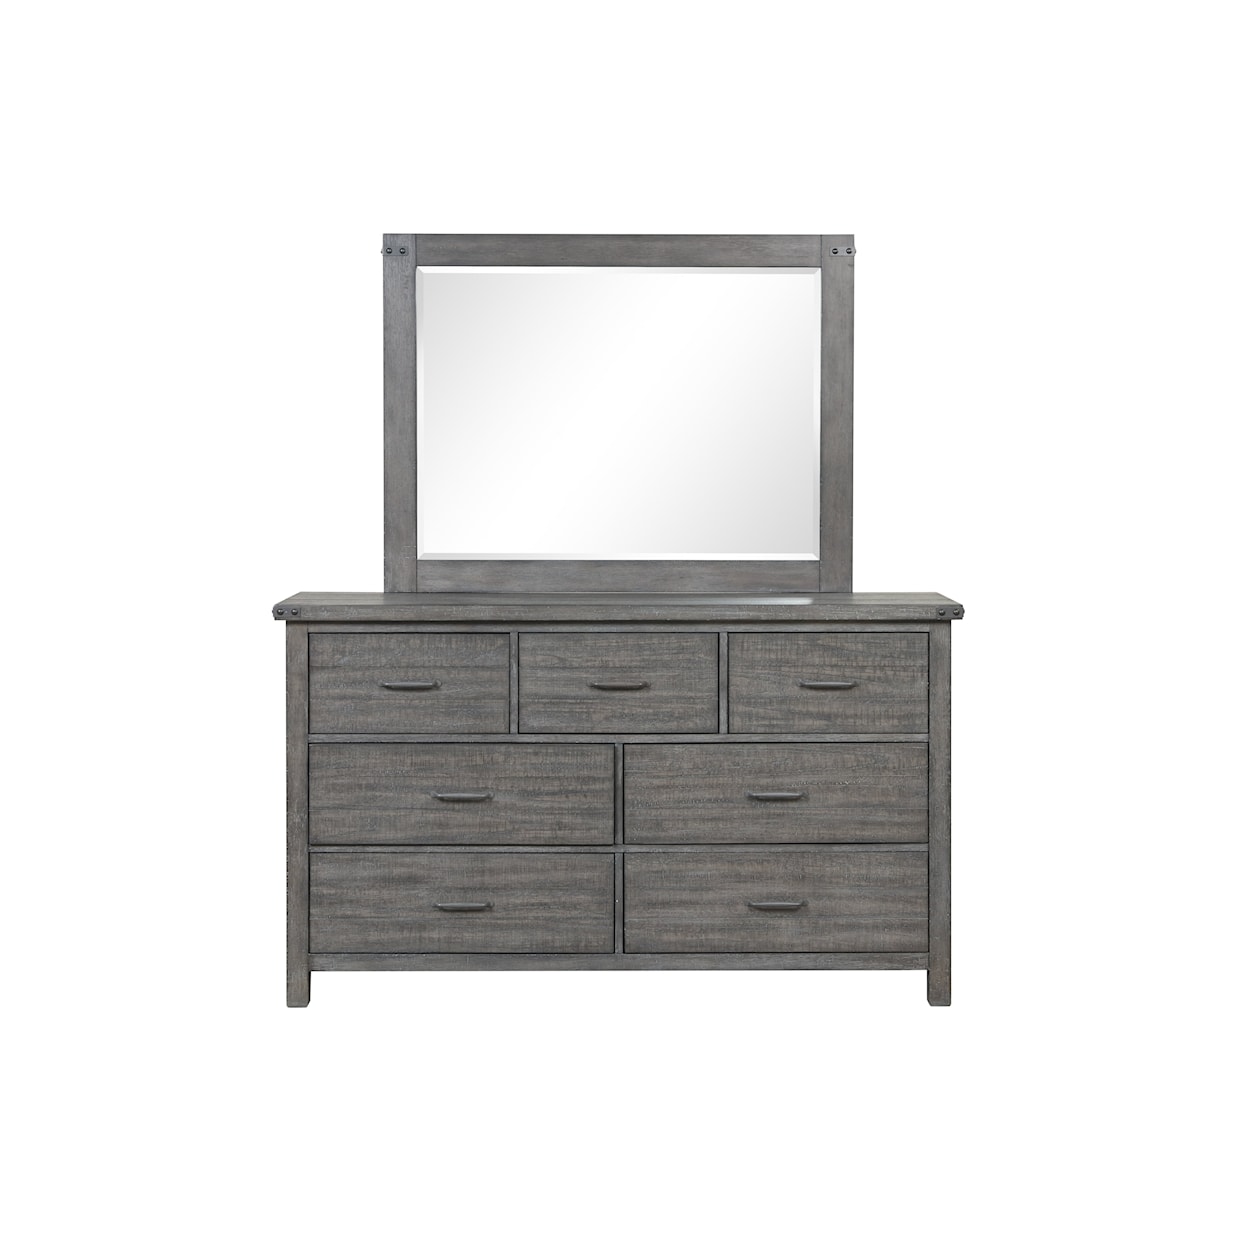 New Classic Furniture Galleon Dresser and Mirror Set